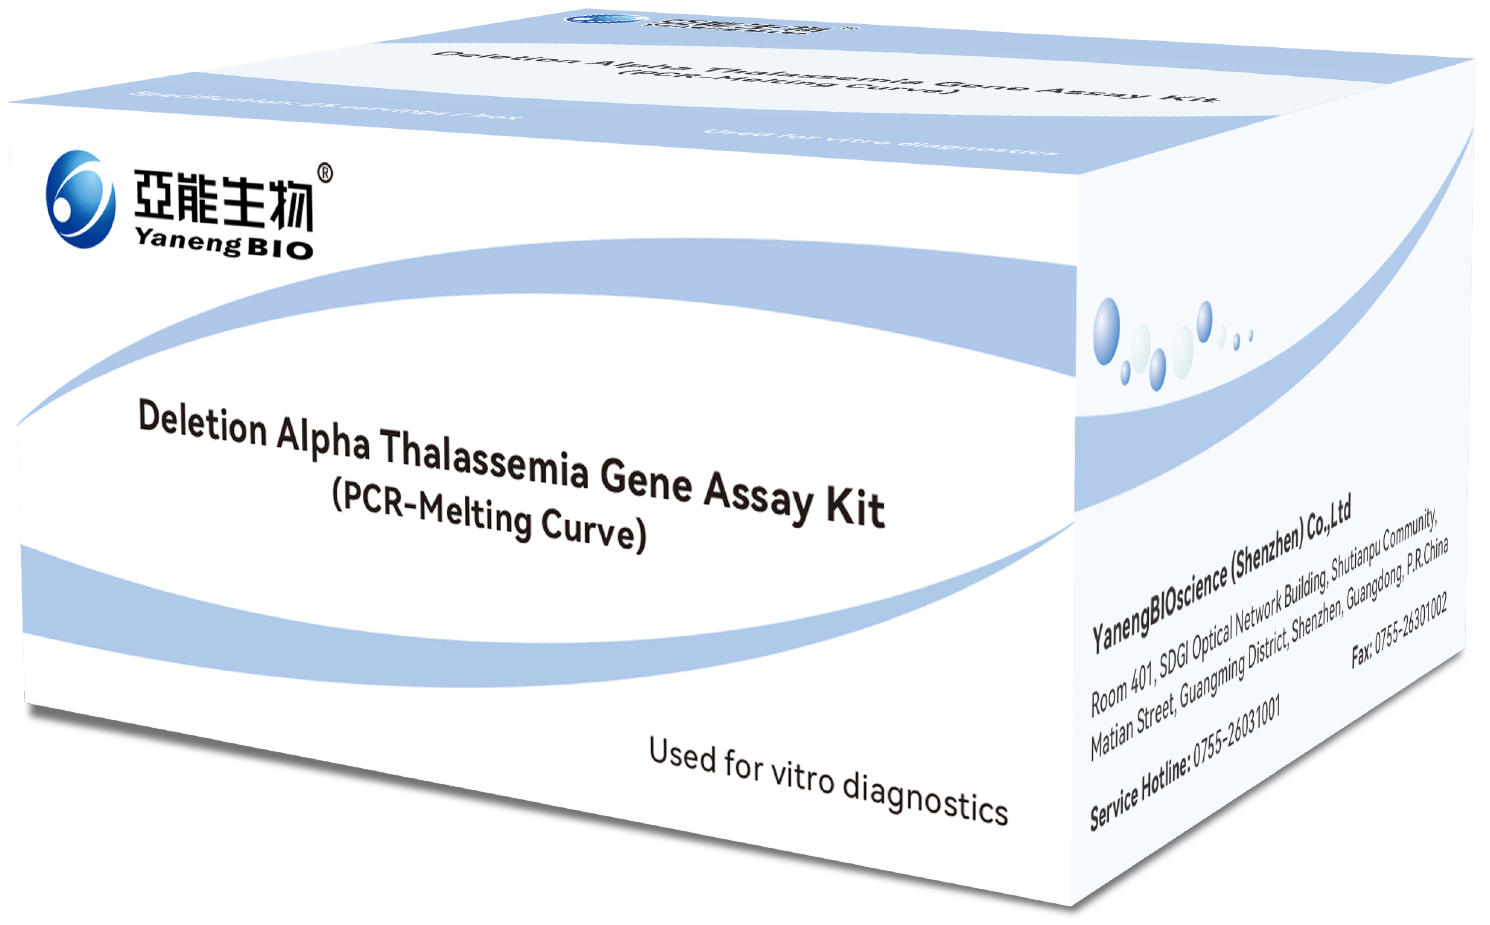 Deletion Alpha Thalassemia Gene Assay Kit -- dαTHA-MMC